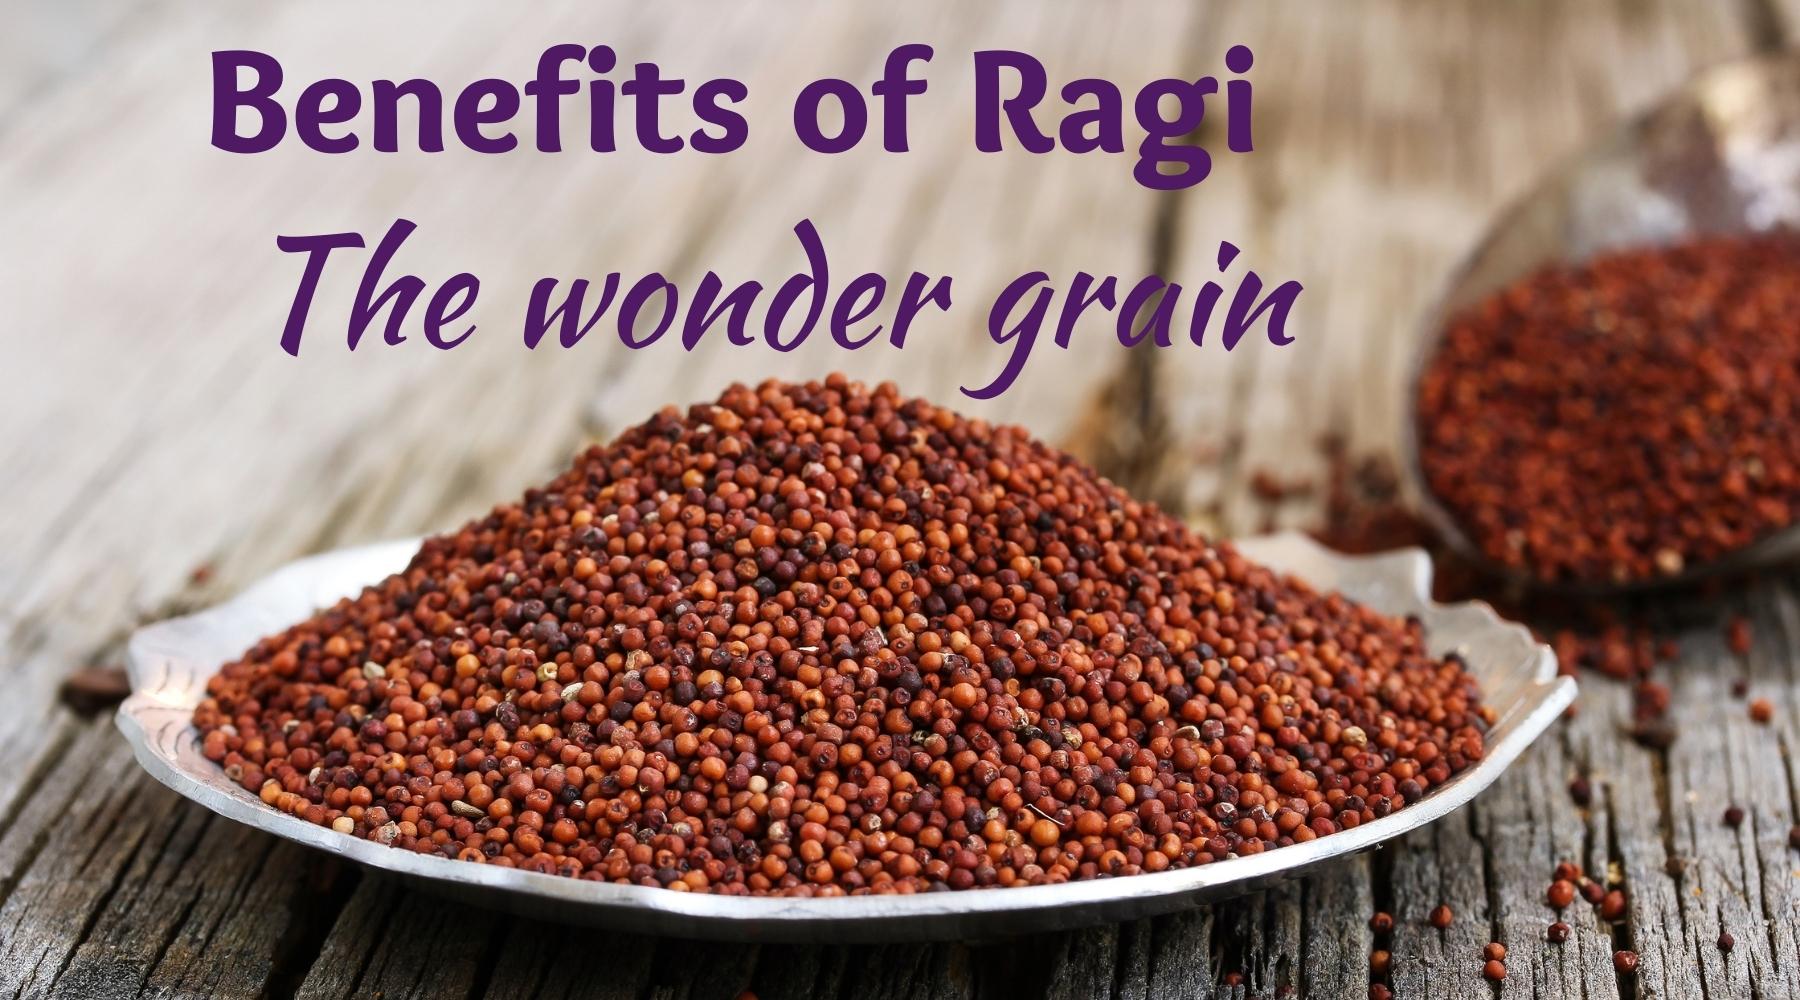 Benefits of Ragi – The wonder grain